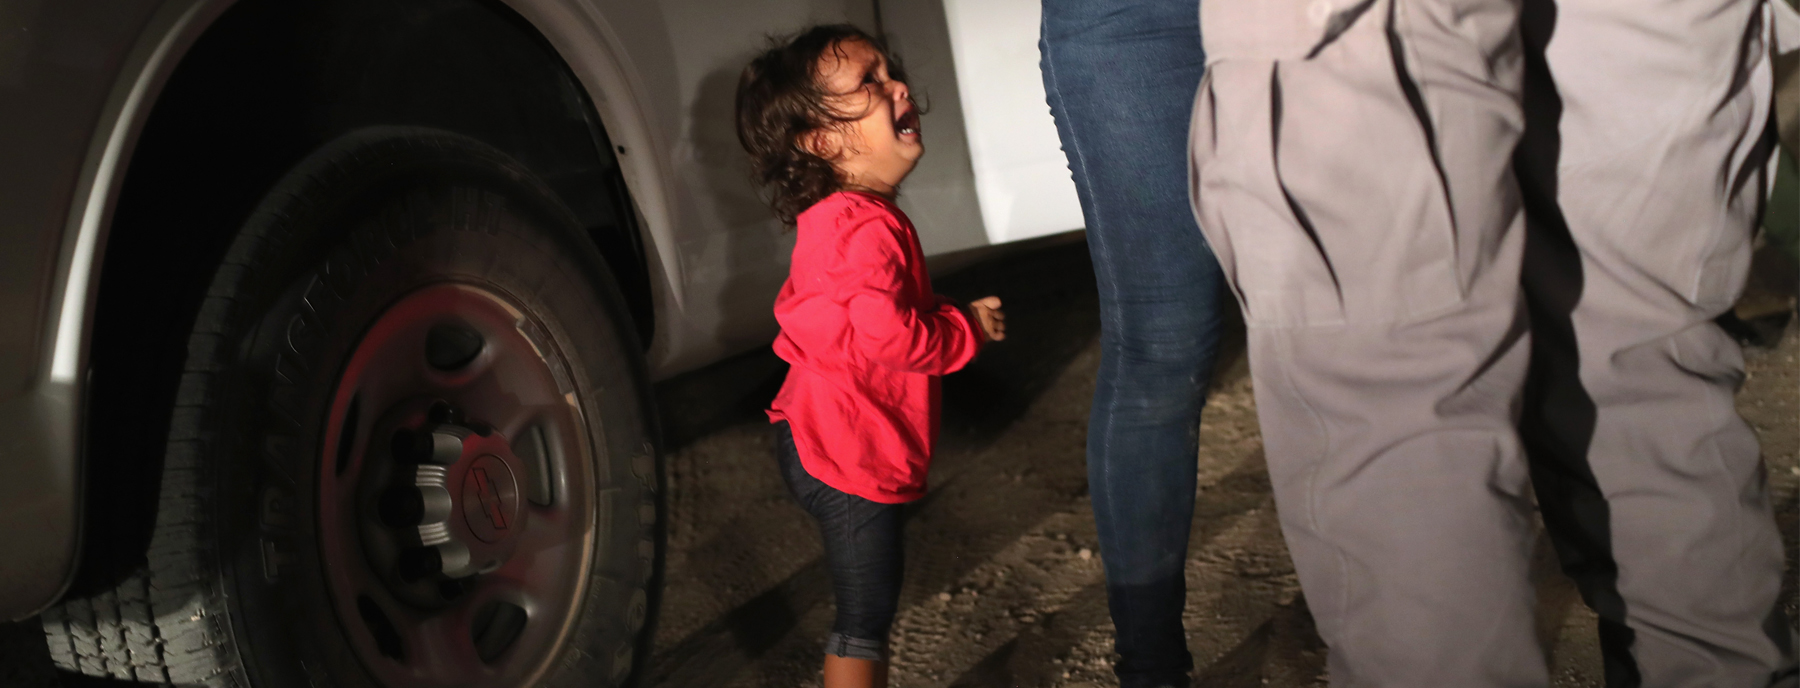 Immigration, Family, Children, Separation, Border Crisis